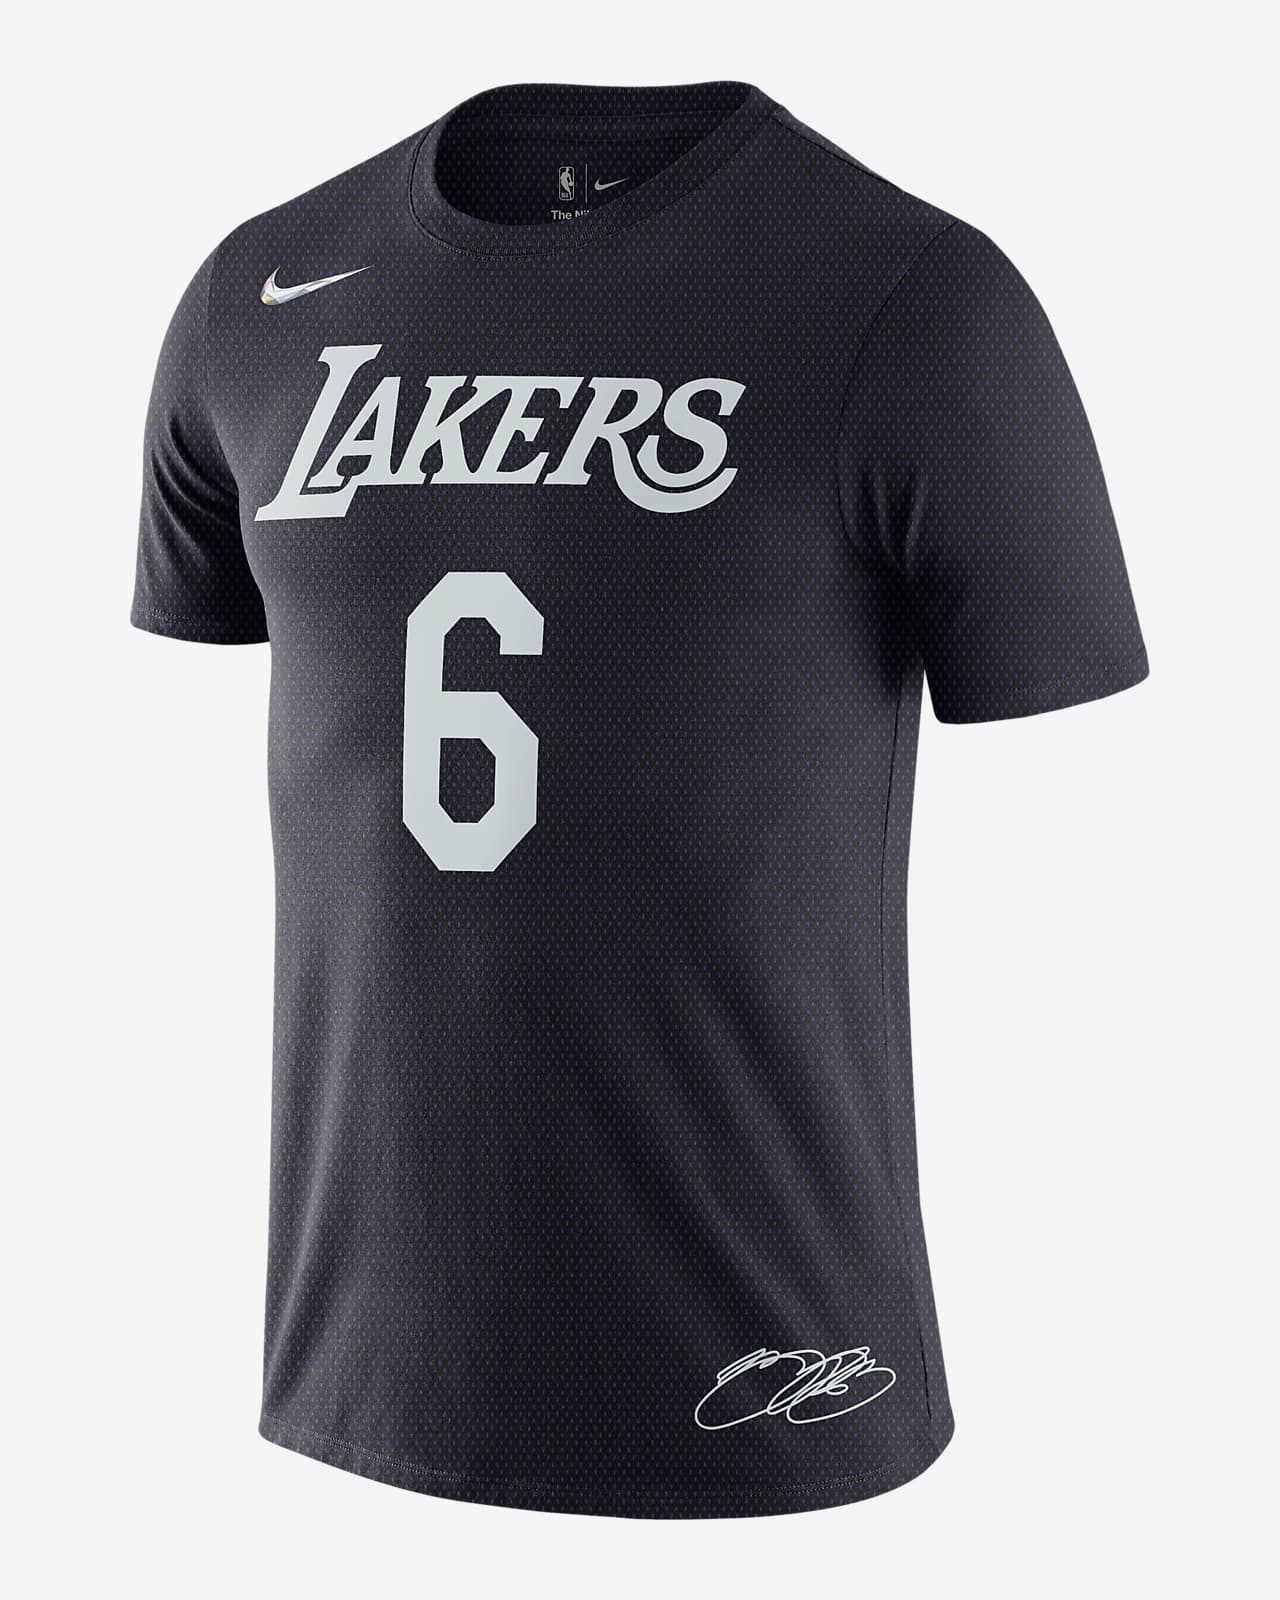 LeBron James Lakers 男款 Nike NBA T 恤